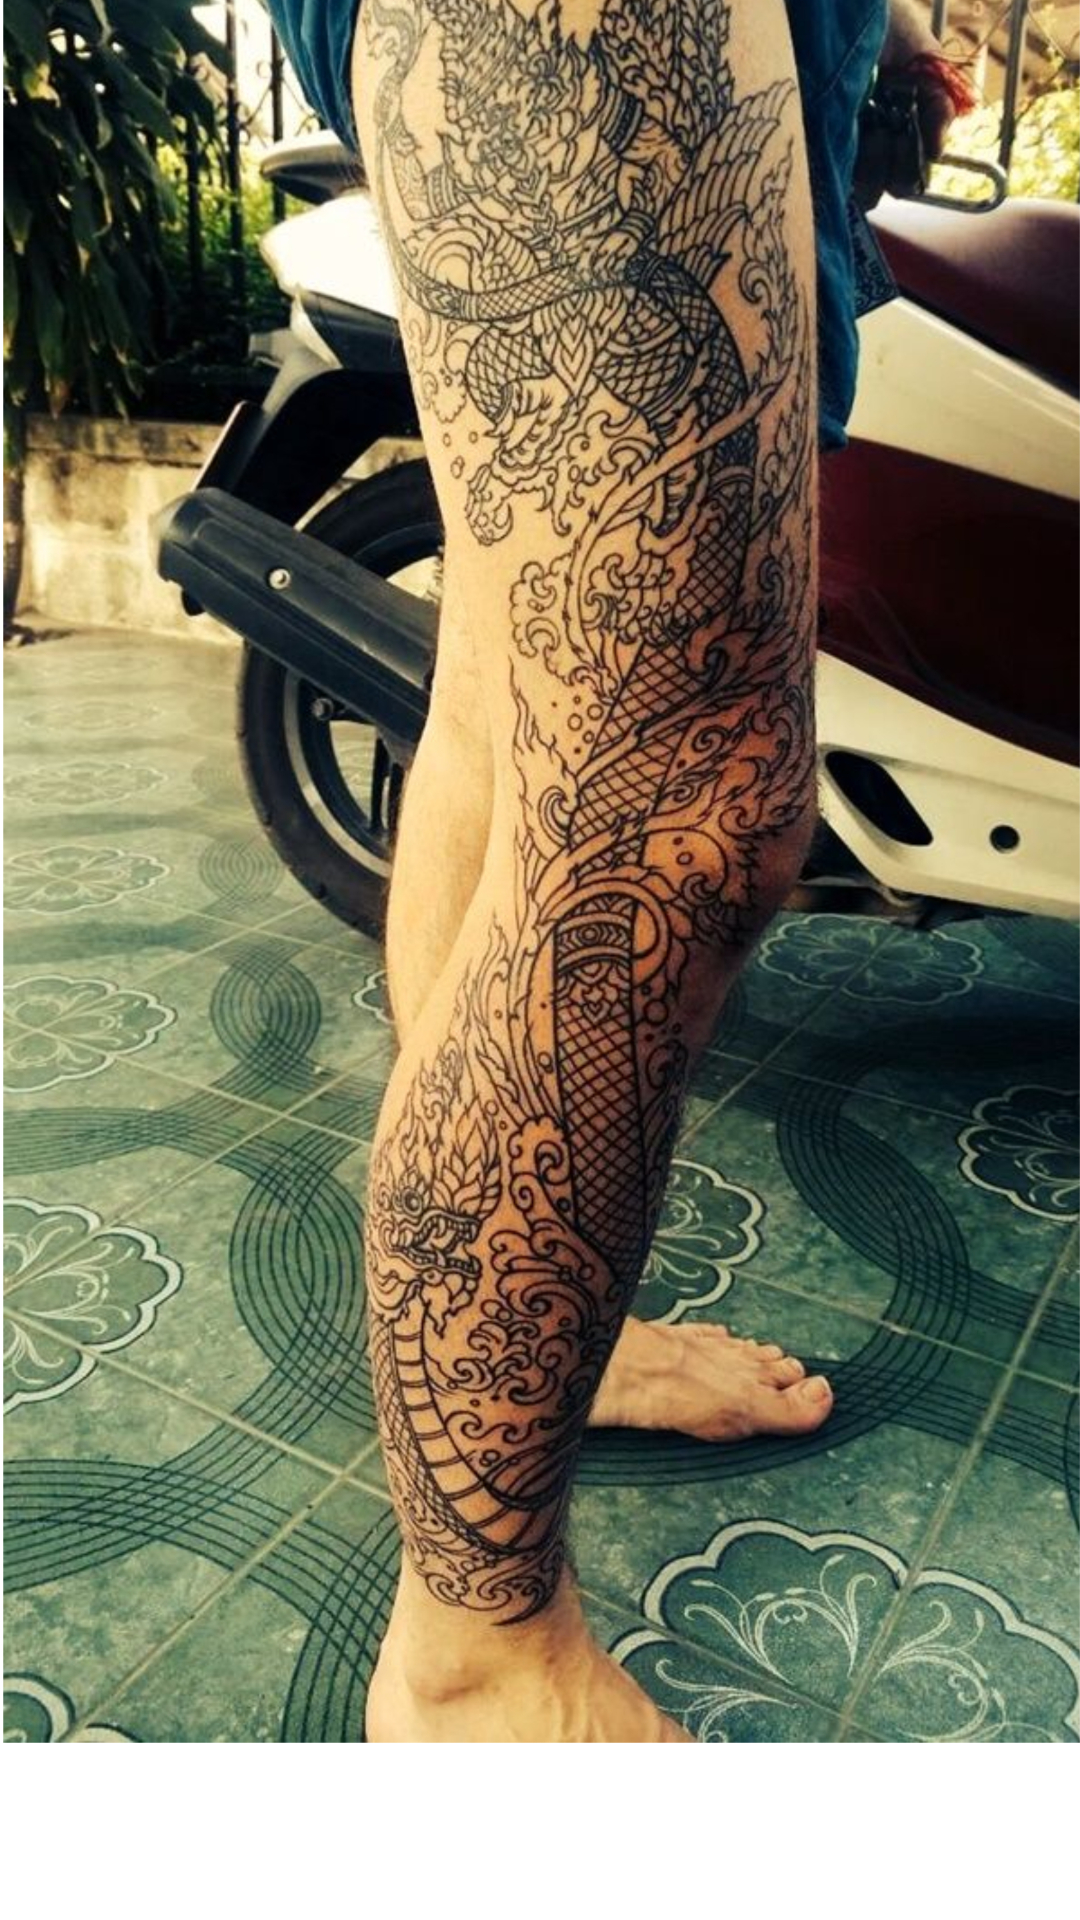 Bel leaf Artist@aditya koley | Shiva tattoo design, Meaningful tattoos, Ink  tattoo